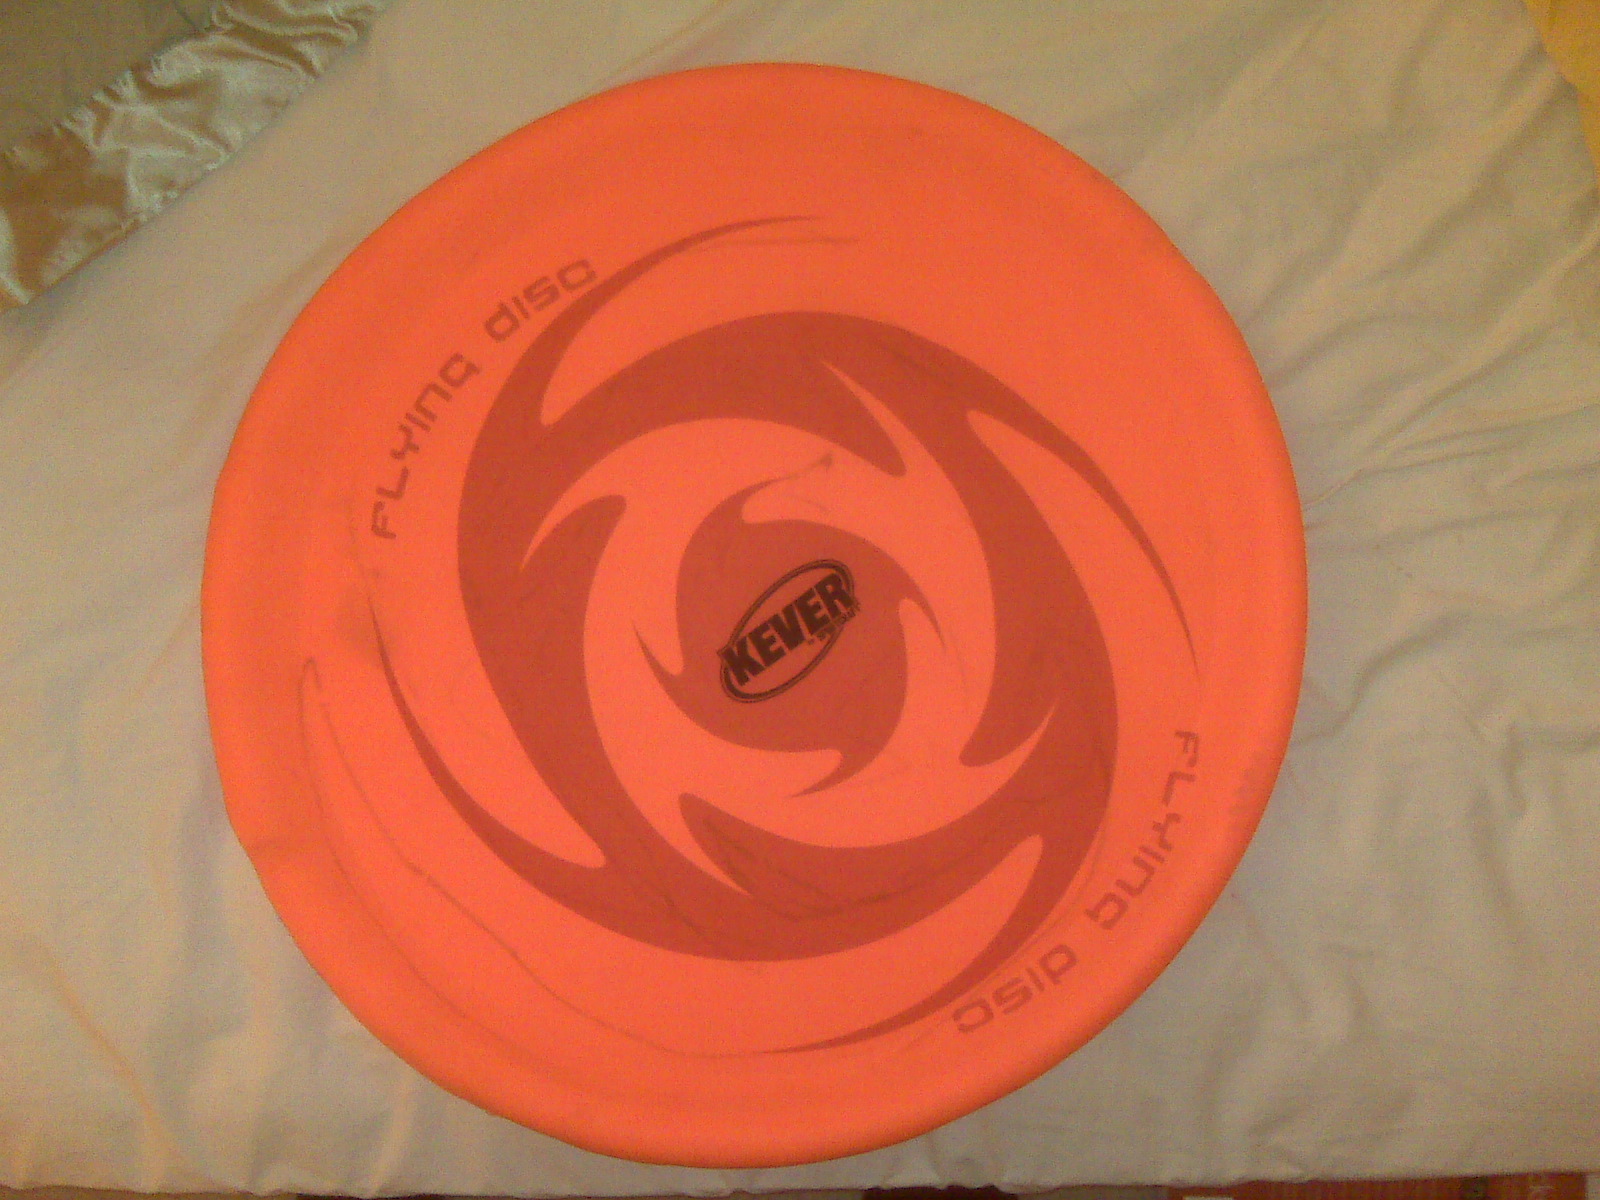 Giant frisbee - Kever Flying Disc